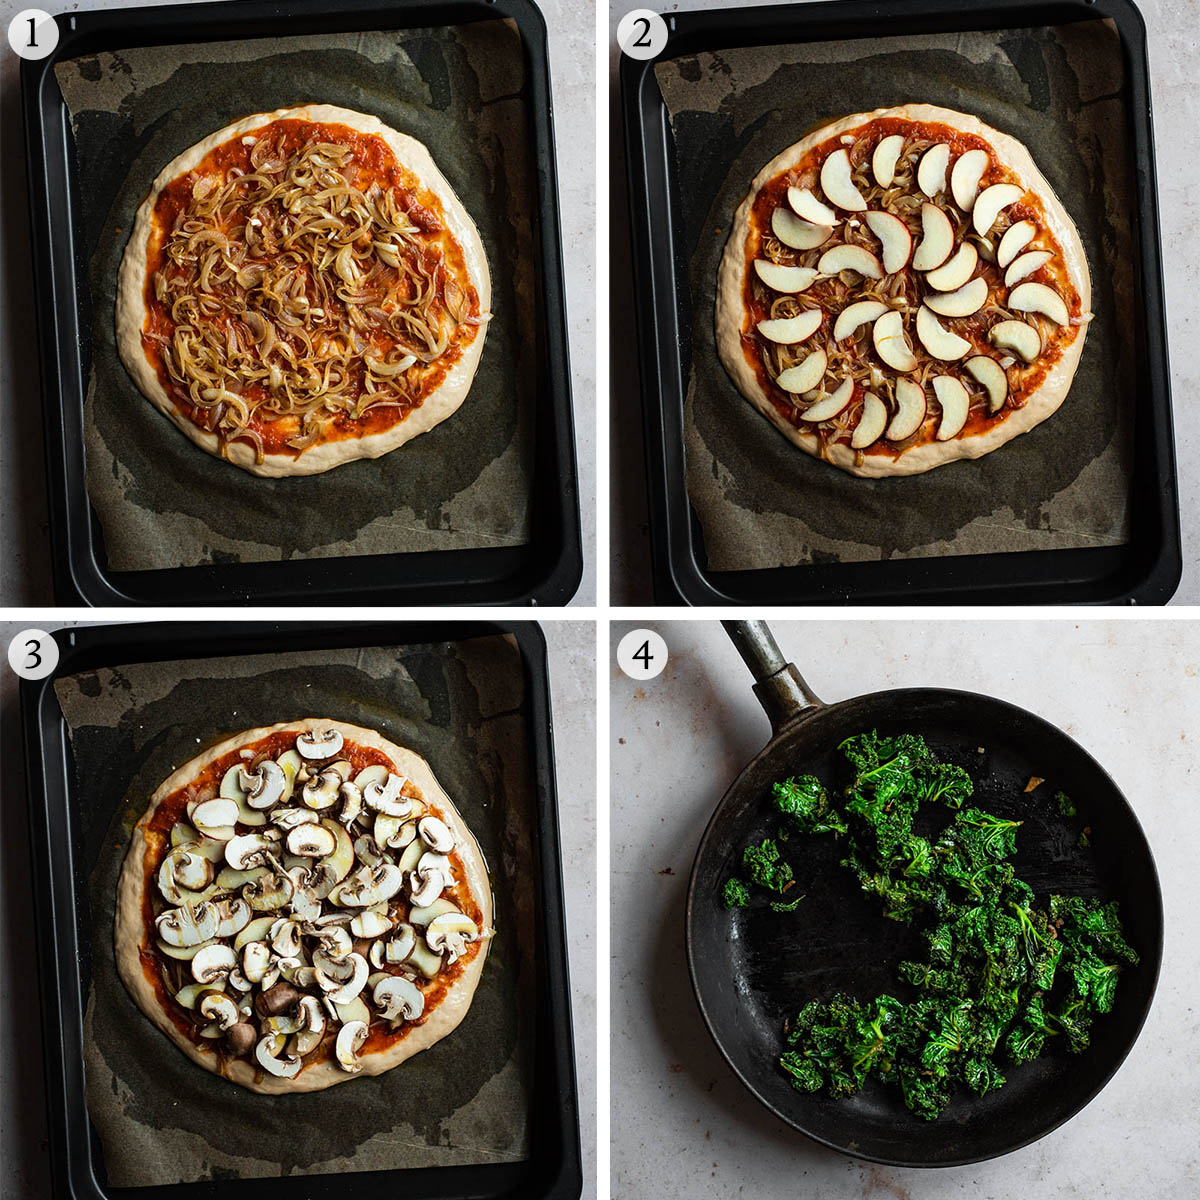 Apple onion and mushroom pizza steps 1 to 4.